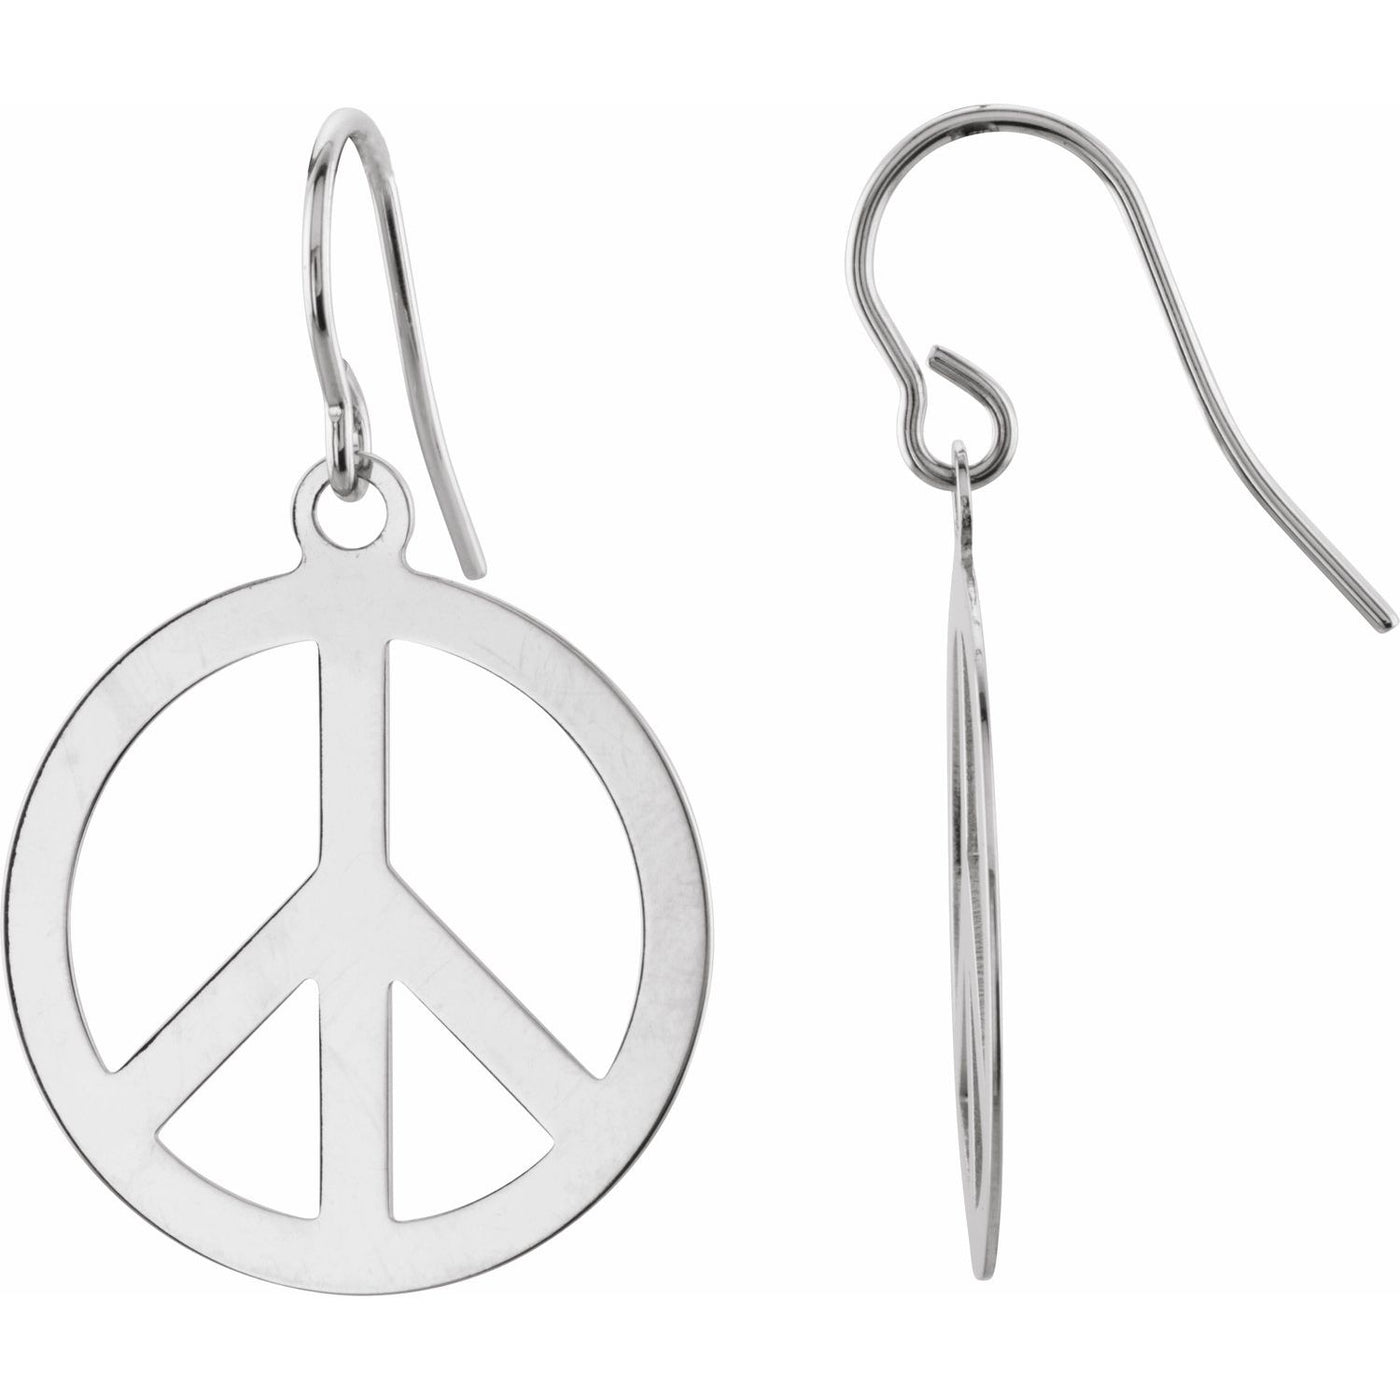 Sterling Silver 21 mm Peace Sign Earrings